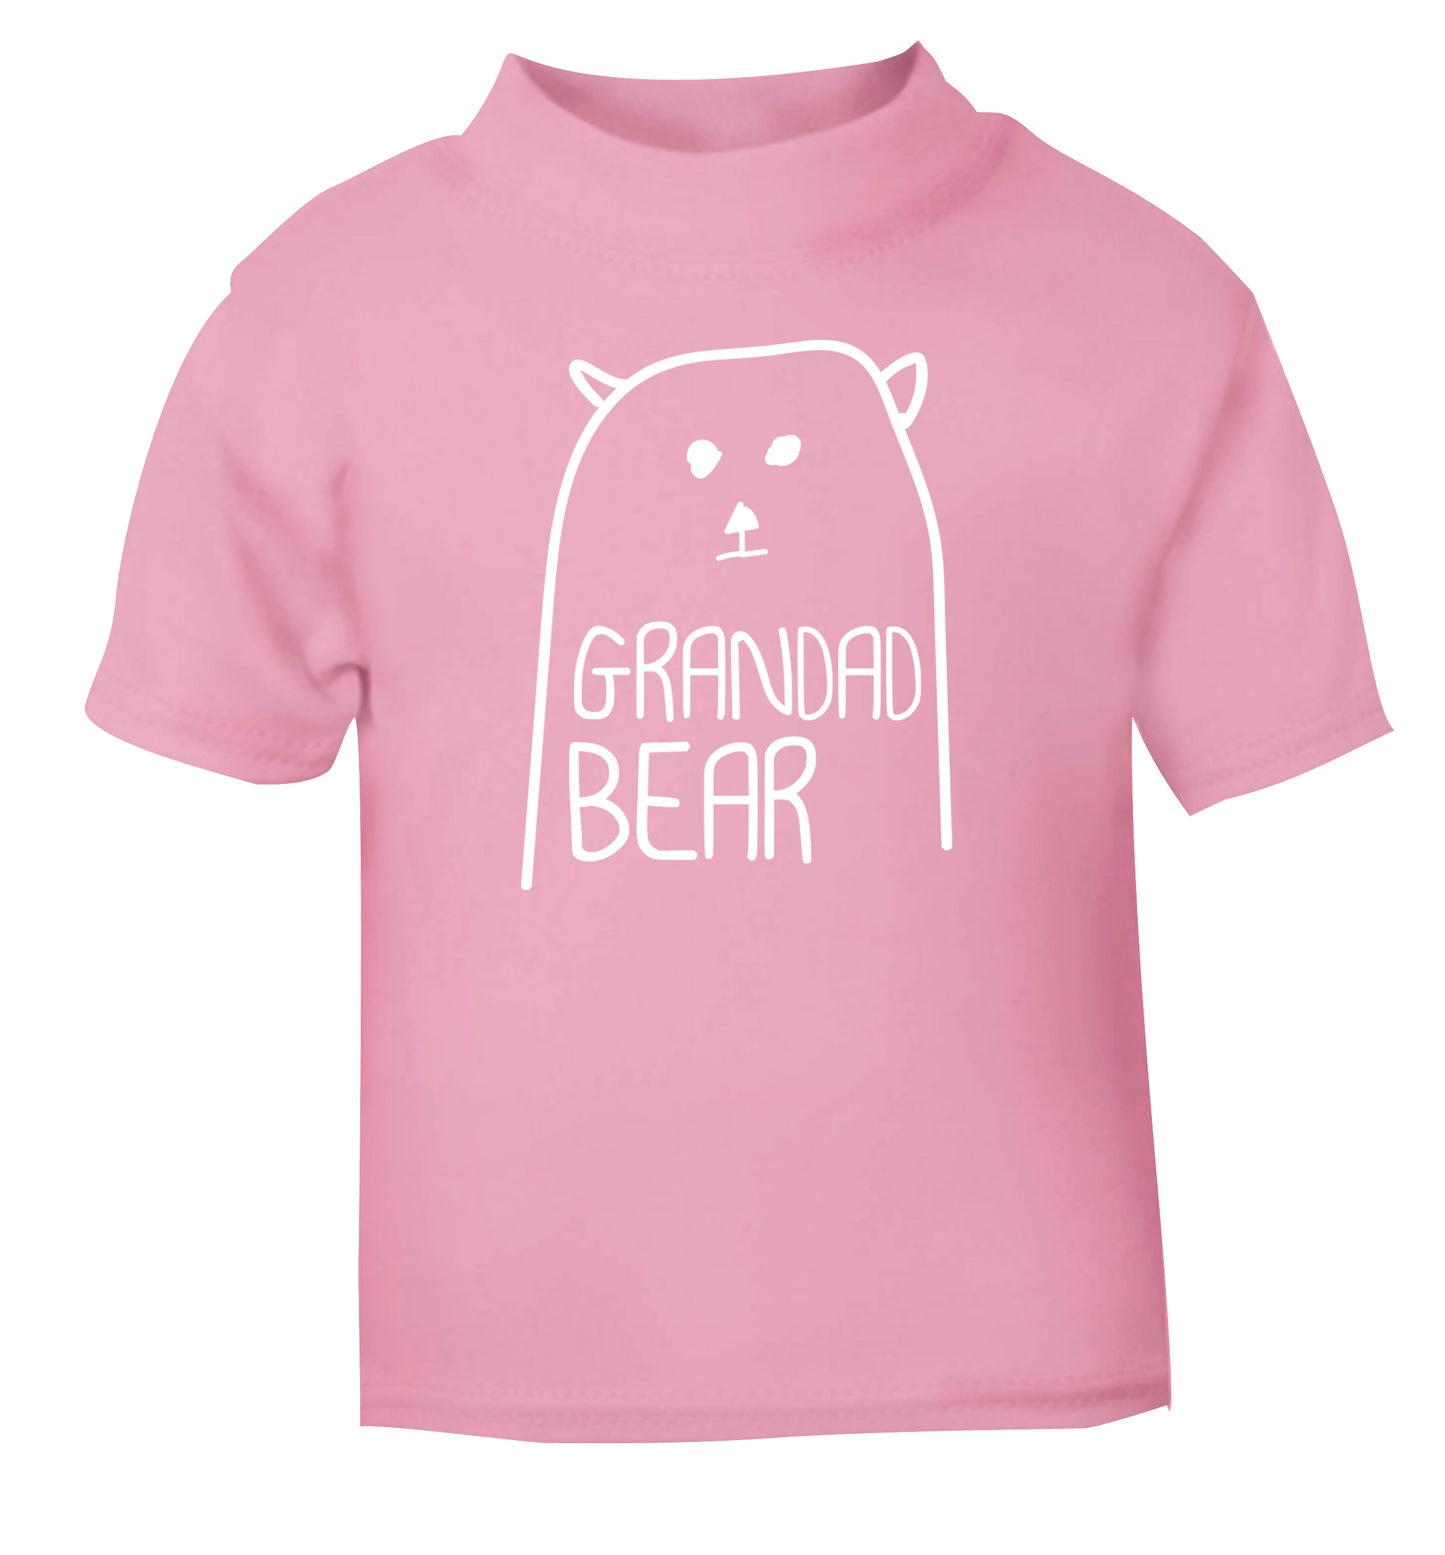 Grandad bear light pink Baby Toddler Tshirt 2 Years